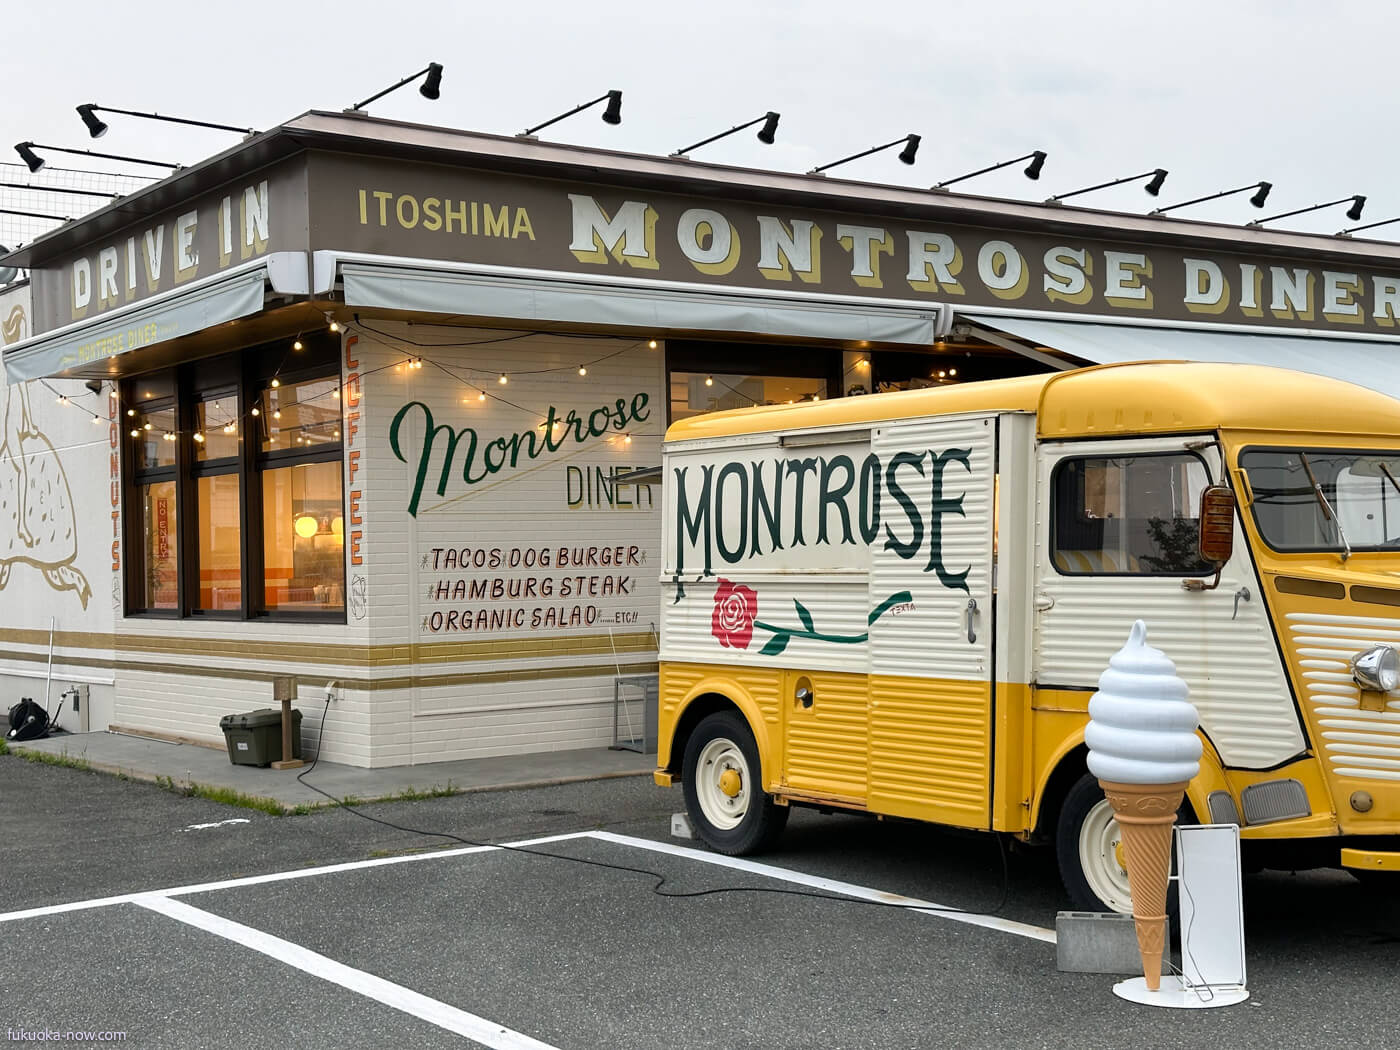 Montrose Diner Itoshima, モントローズダイナー糸島